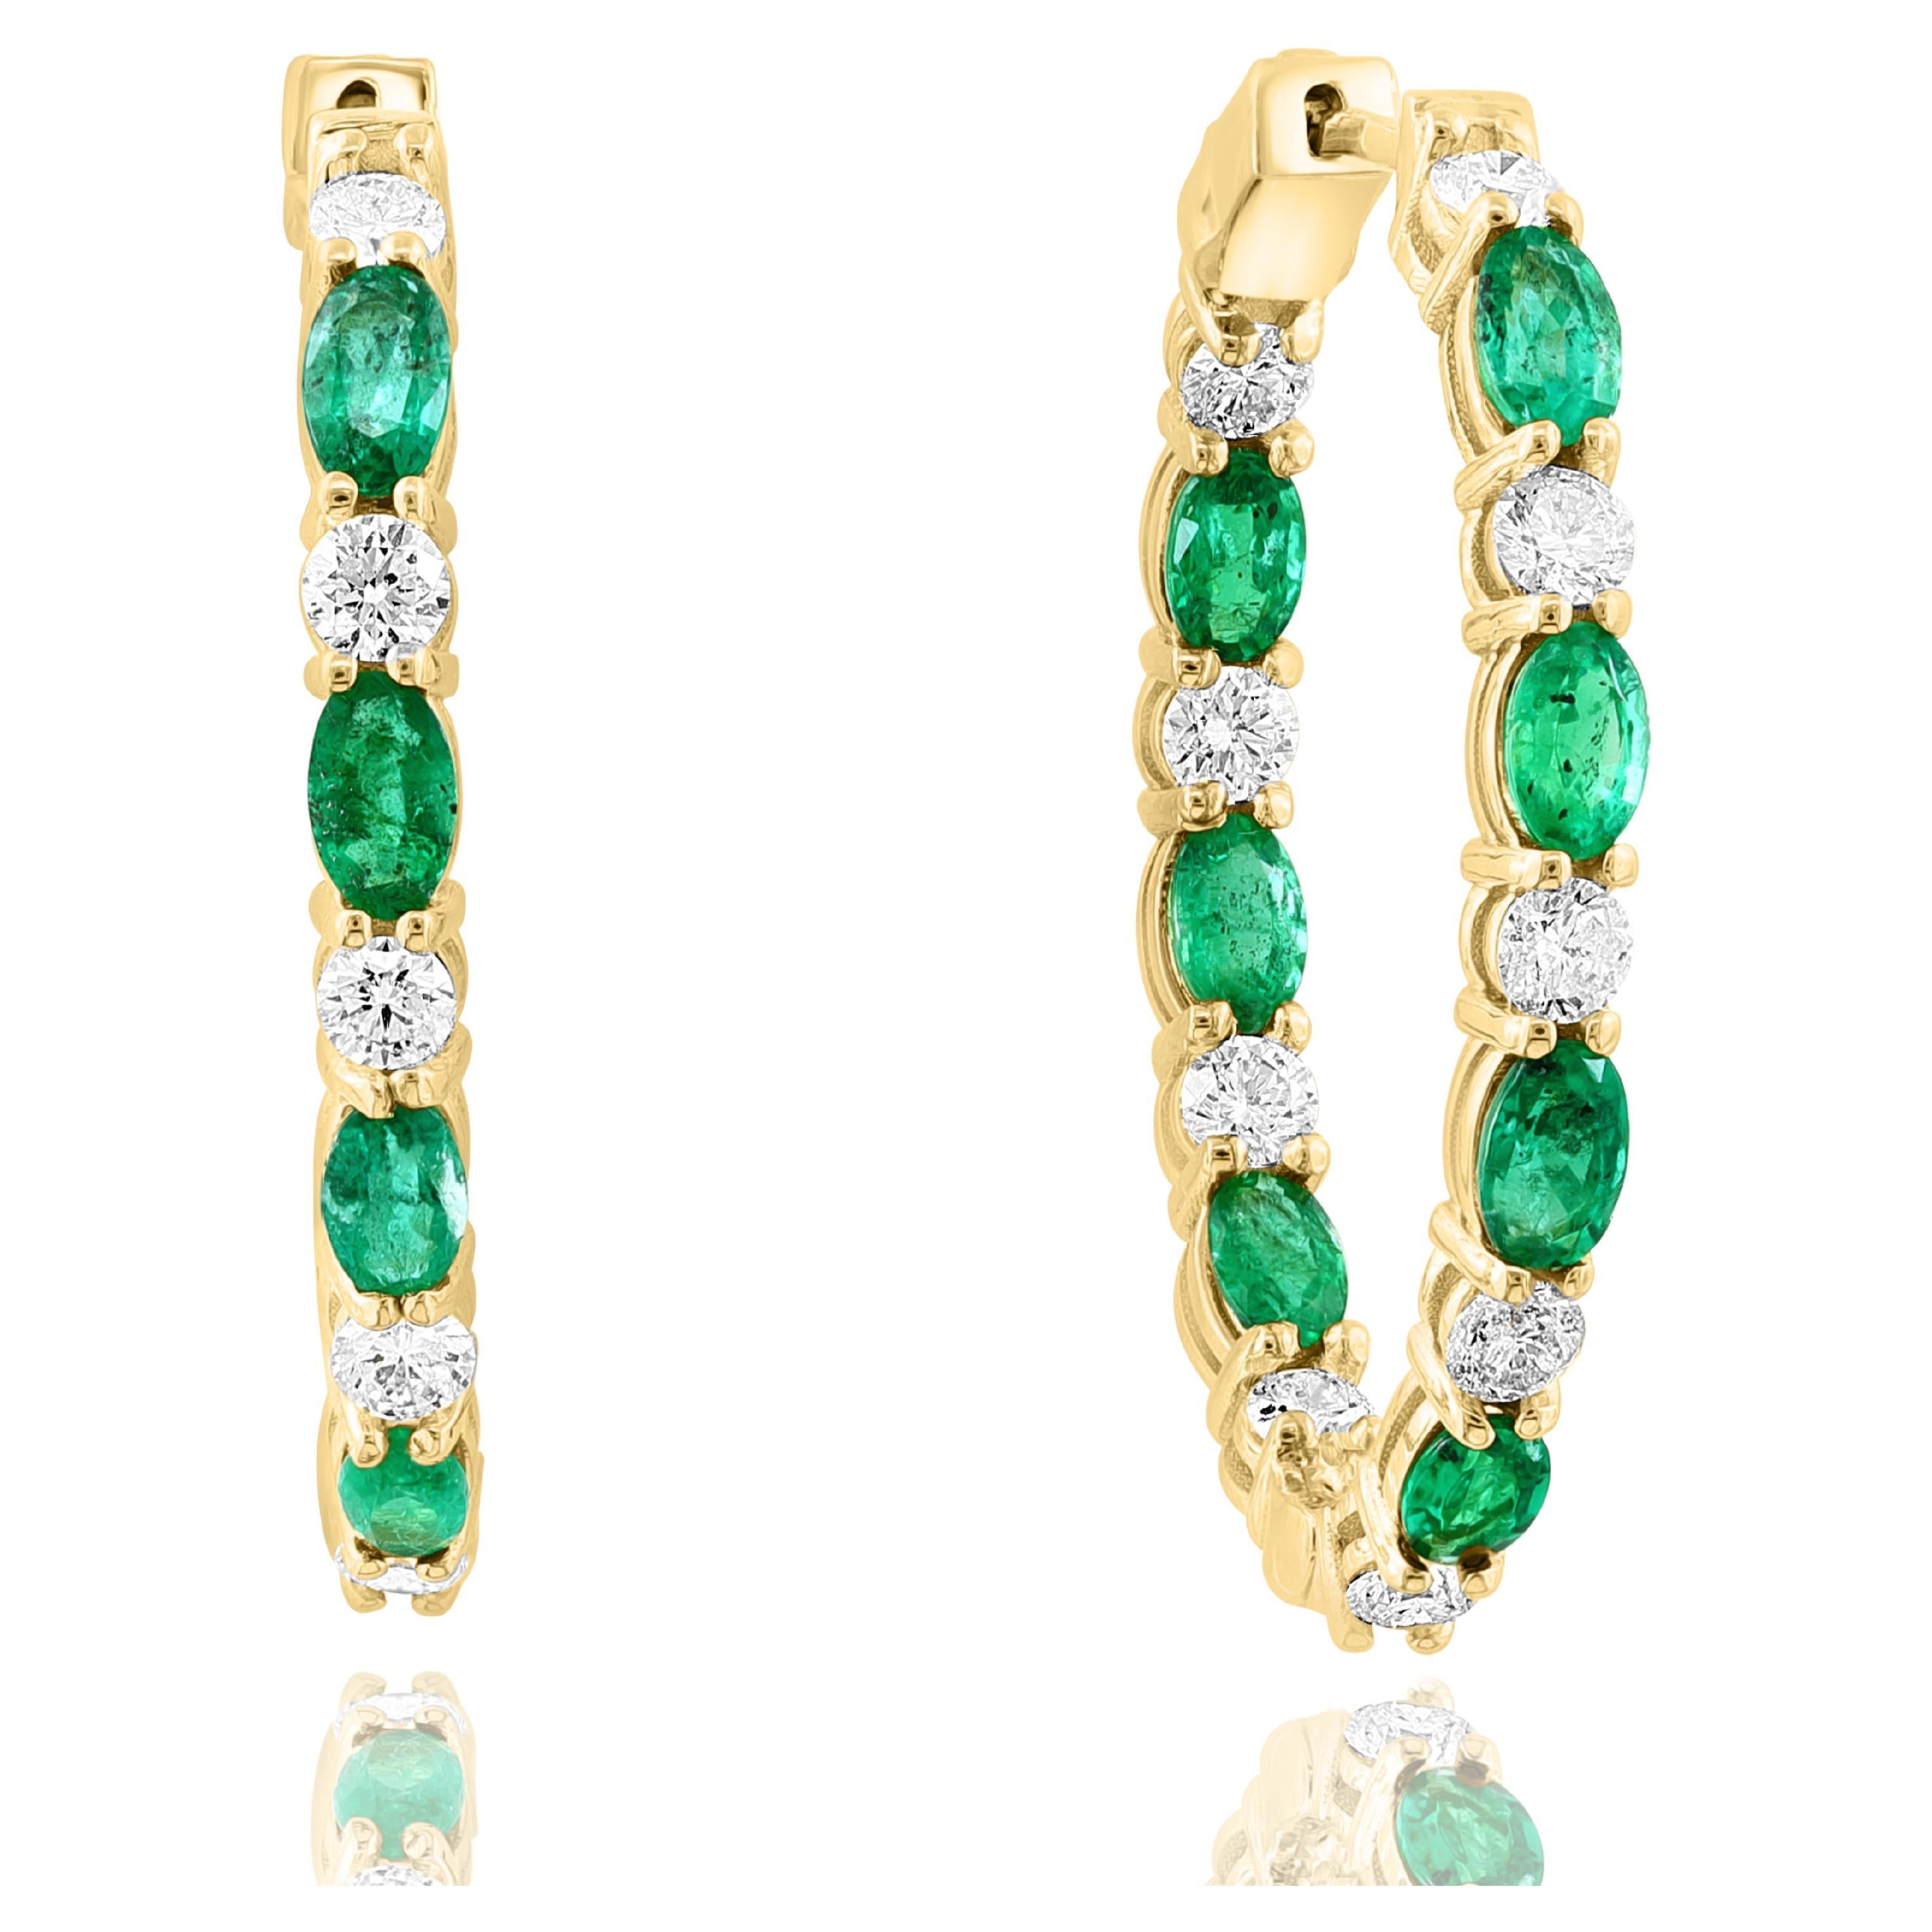 3.13 Carat Oval Cut Emerald and Diamond Hoop Earrings in 14K Yellow Gold